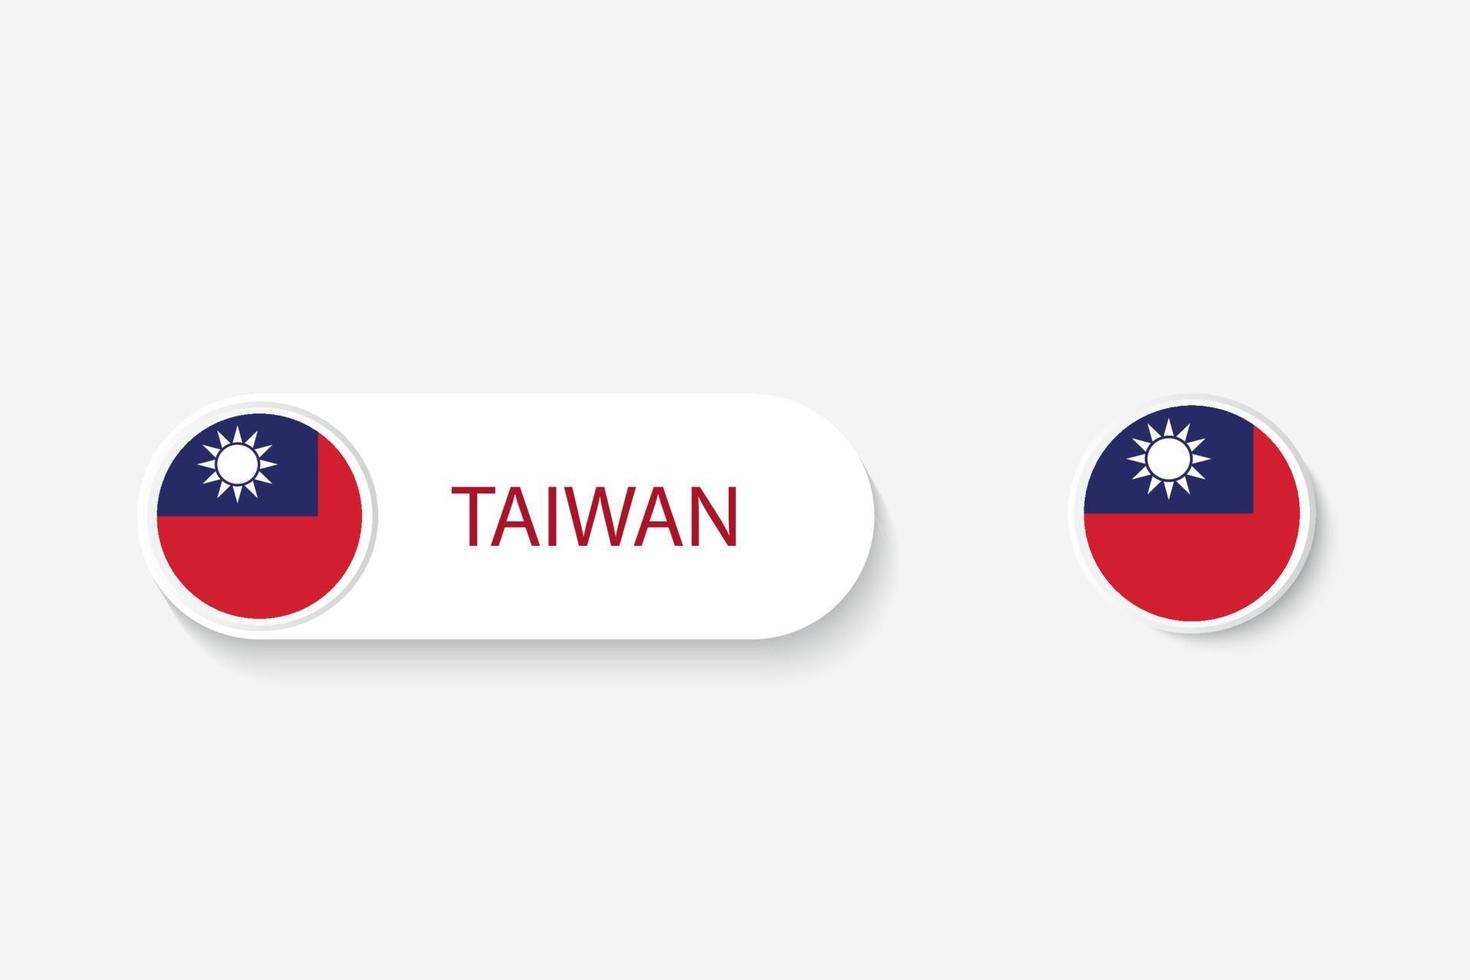 Taiwan knop vlag in illustratie van ovaal gevormd met woord van Taiwan. en knop vlag taiwan. vector